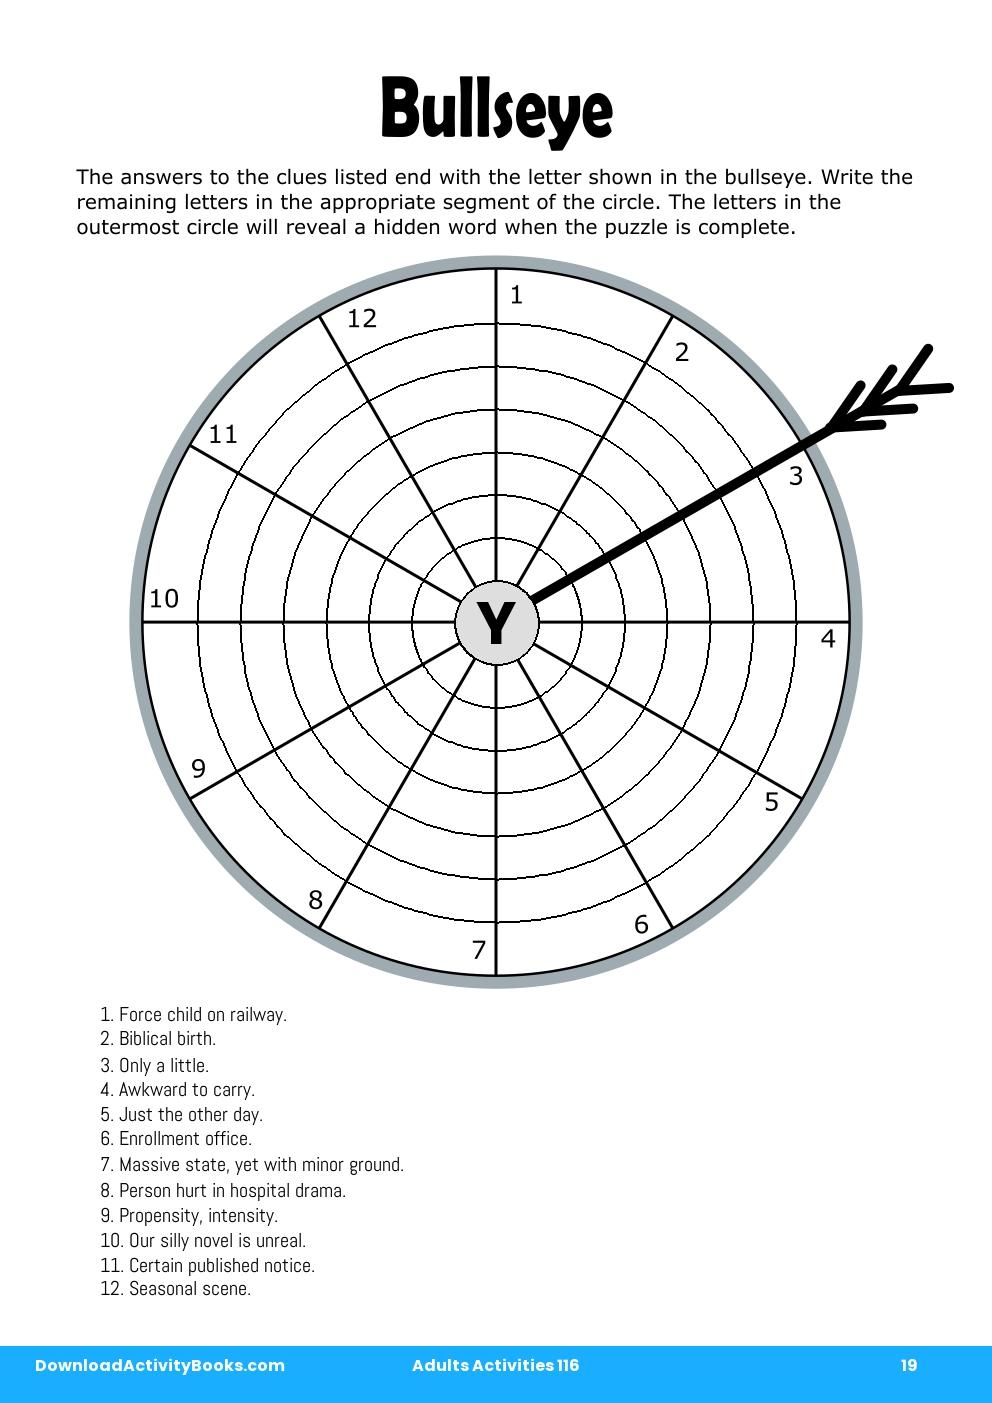 Bullseye in Adults Activities 116